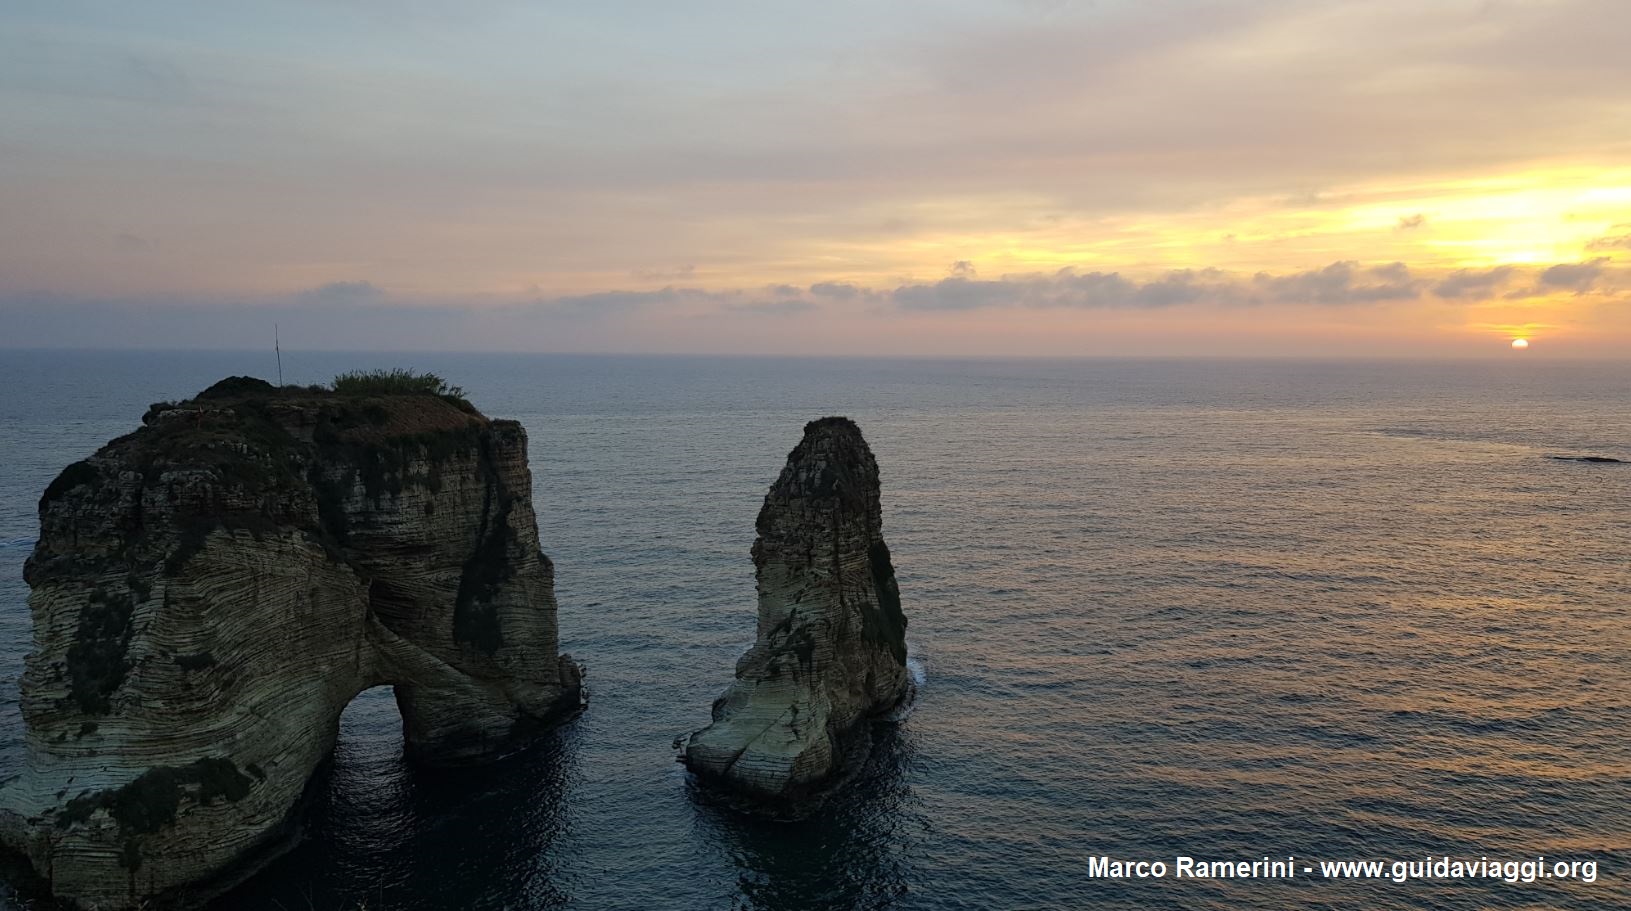 Por do sol nas rochas do Raouché, Beirute, Líbano. Autor e Copyright Marco Ramerini